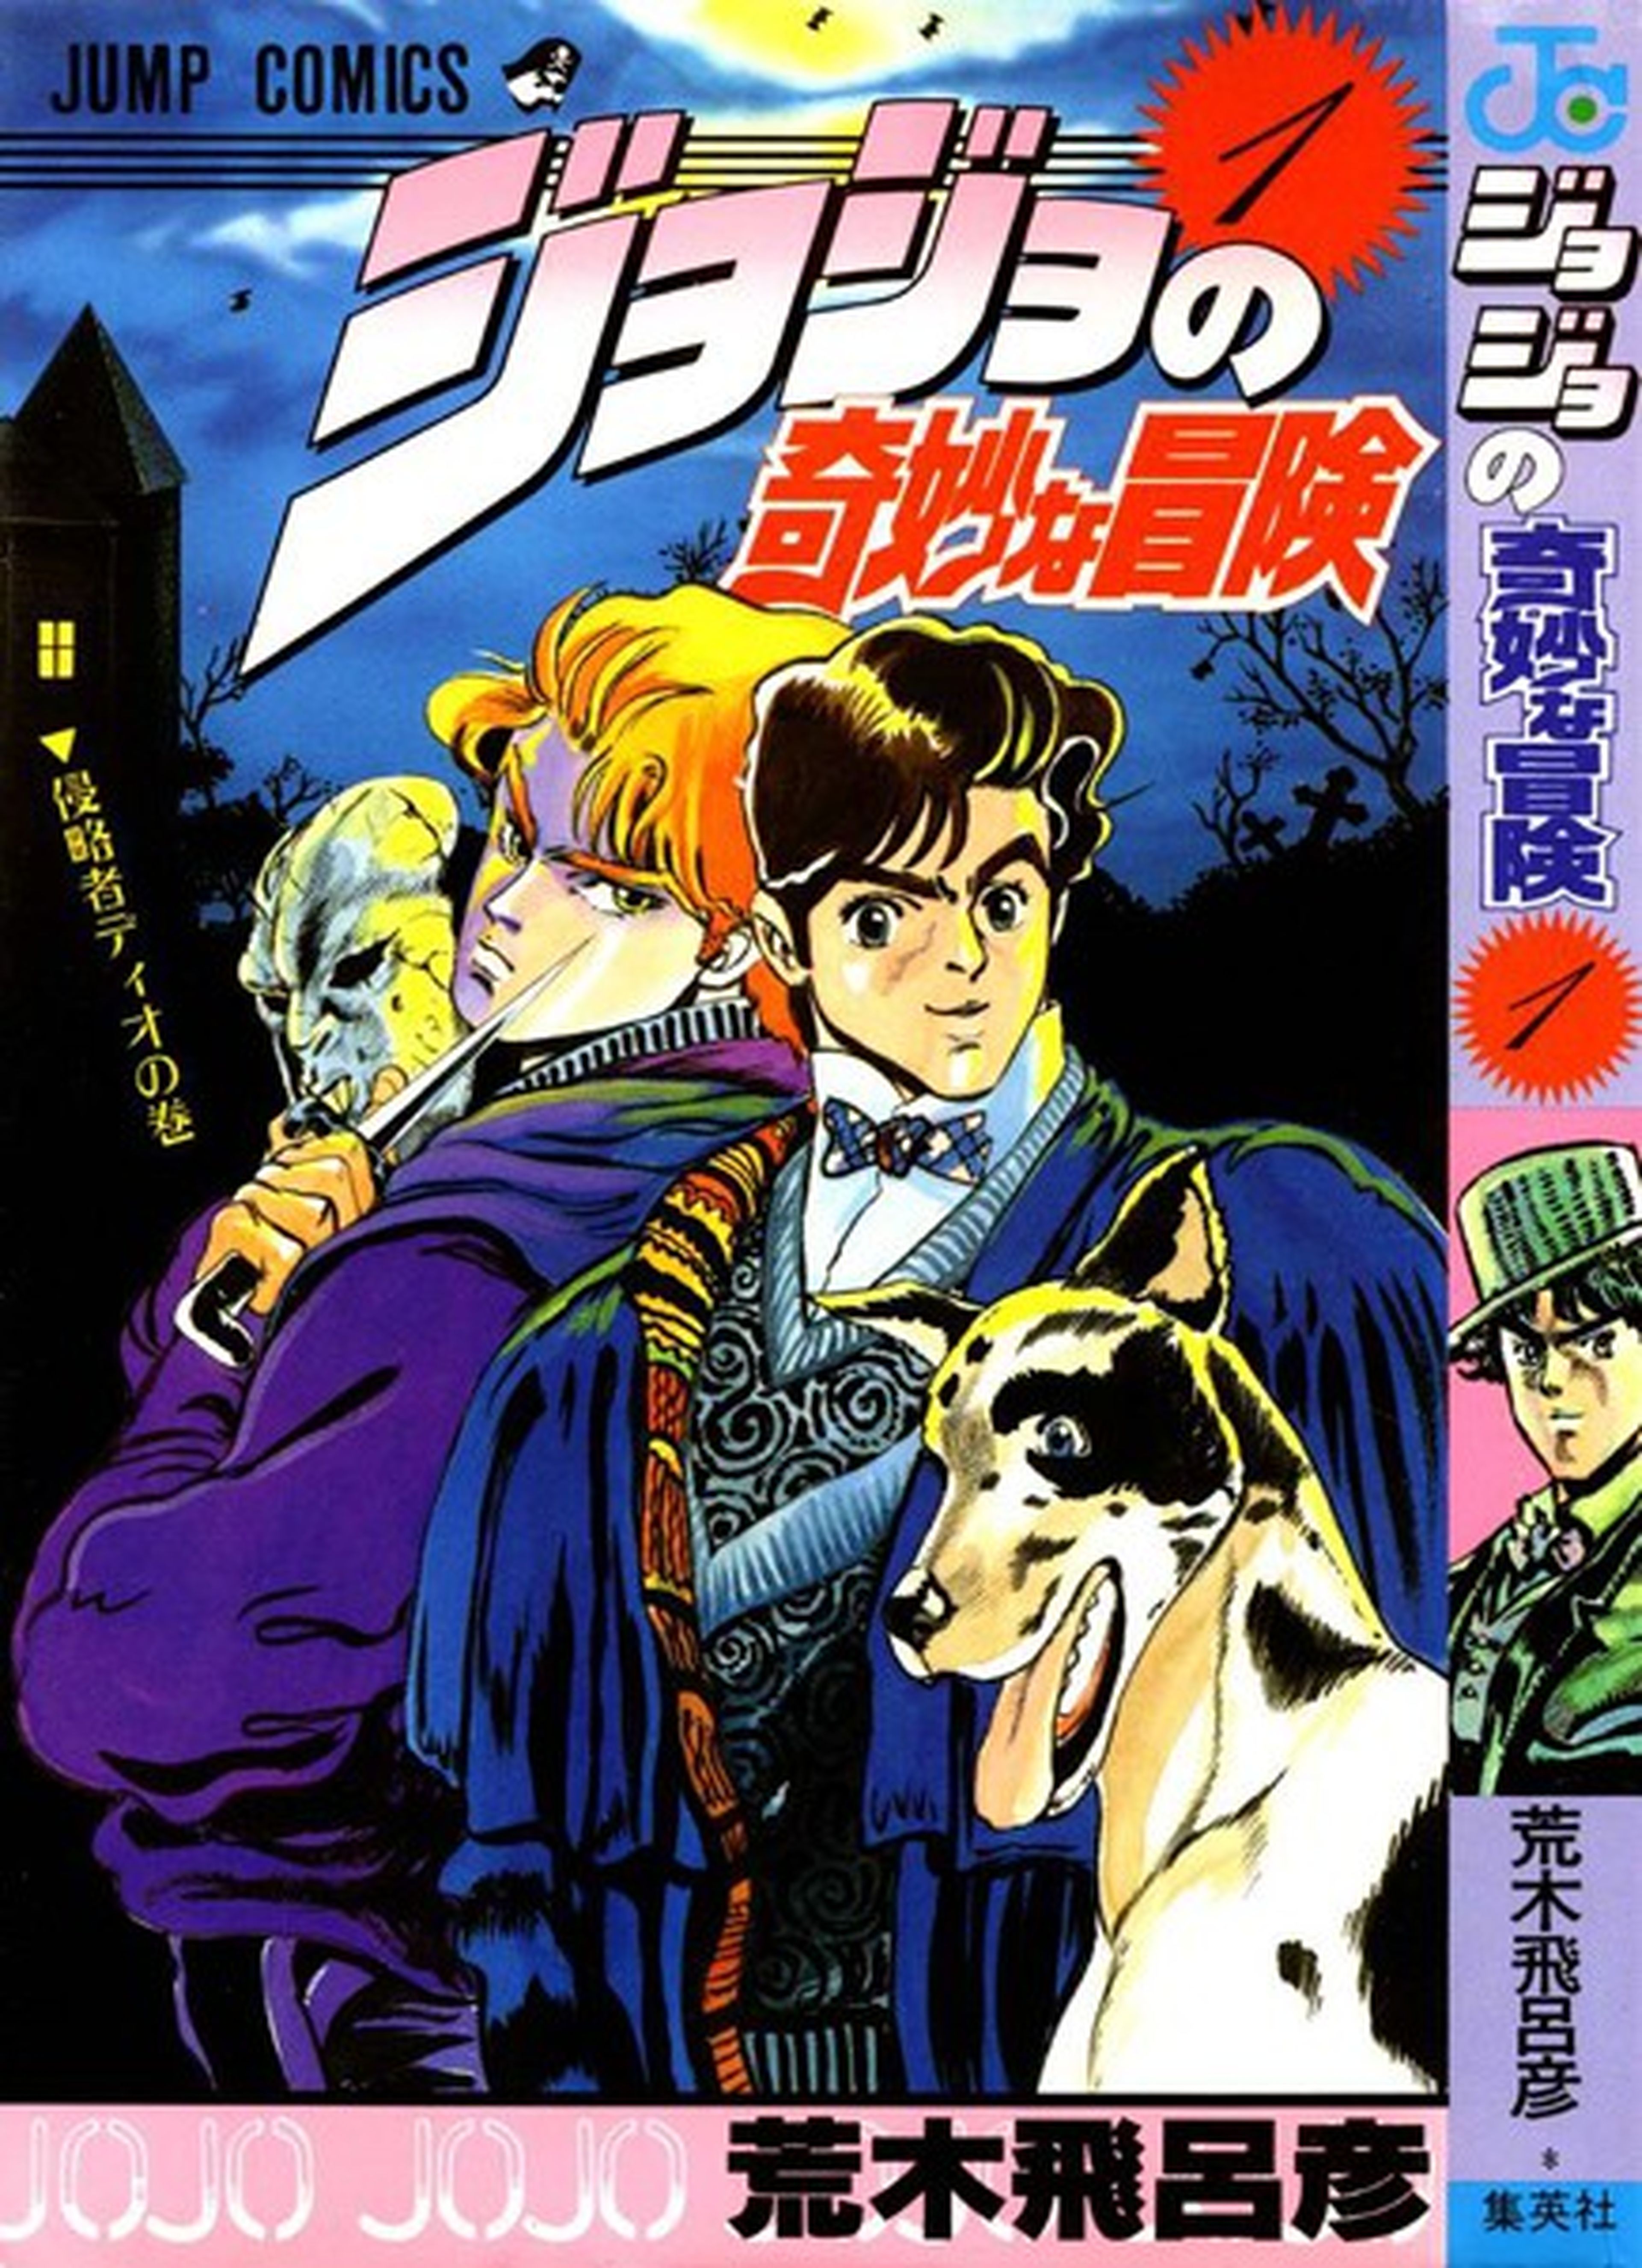 Edición de lujo del manga JoJo's Bizarre Adventure